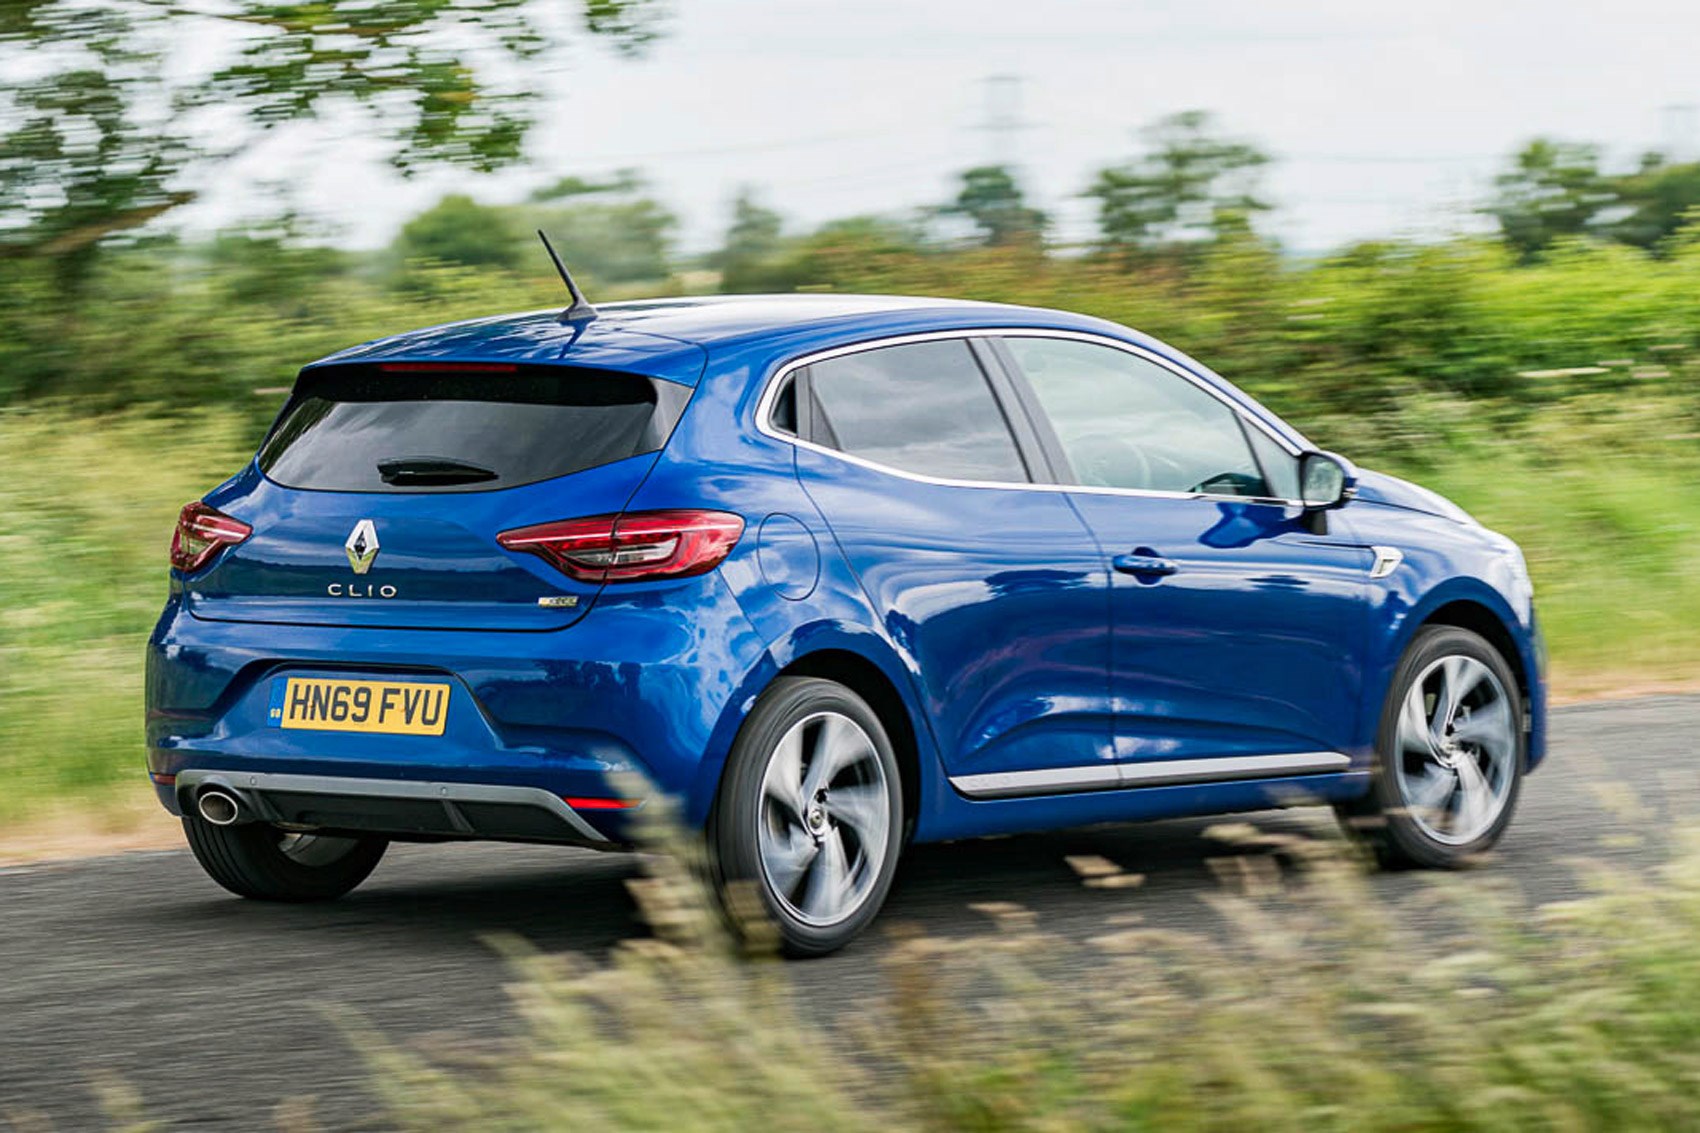 Renault Clio News and Reviews